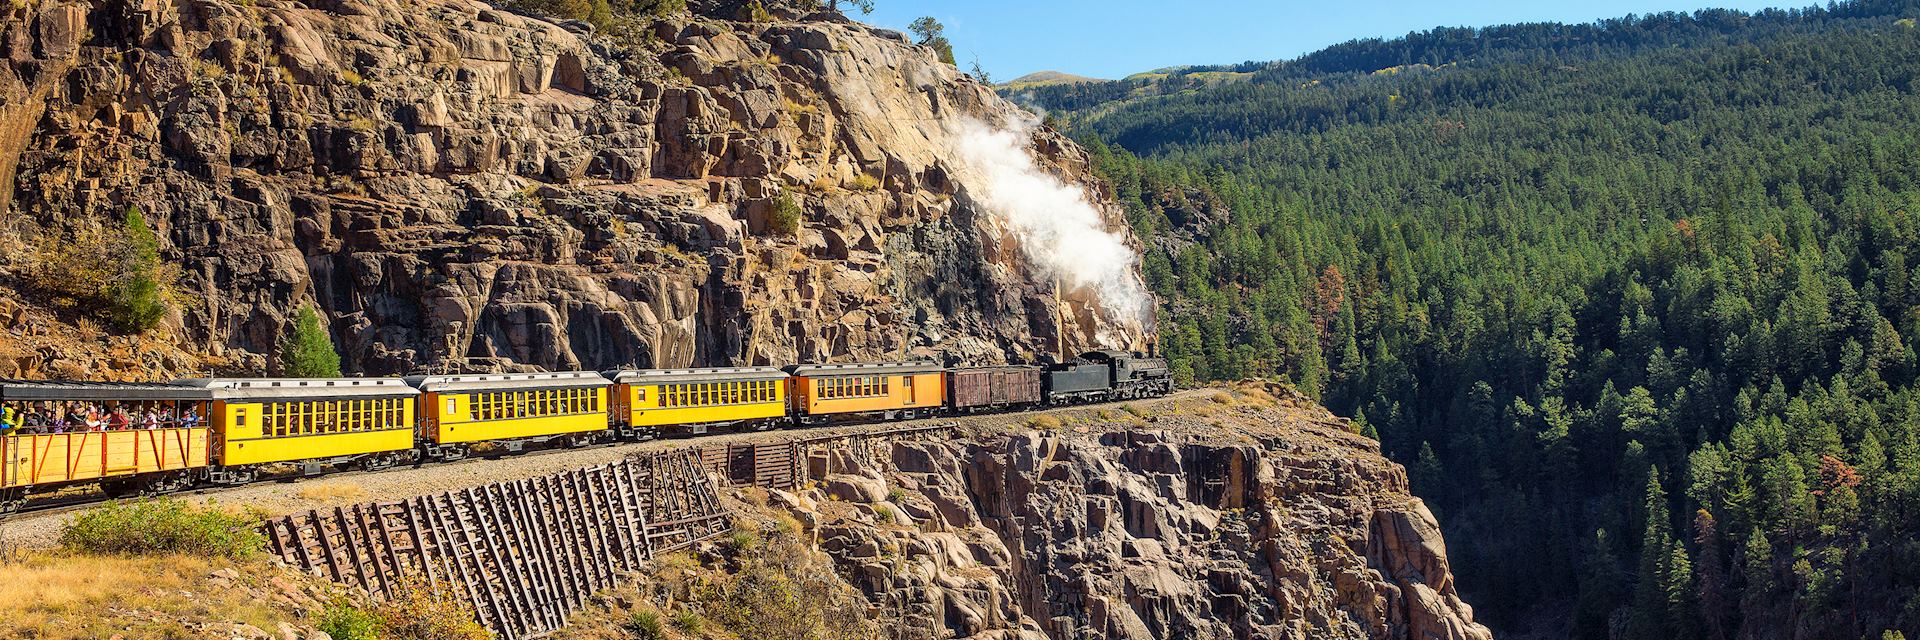 Durango and Silverton Railroad, Colorado